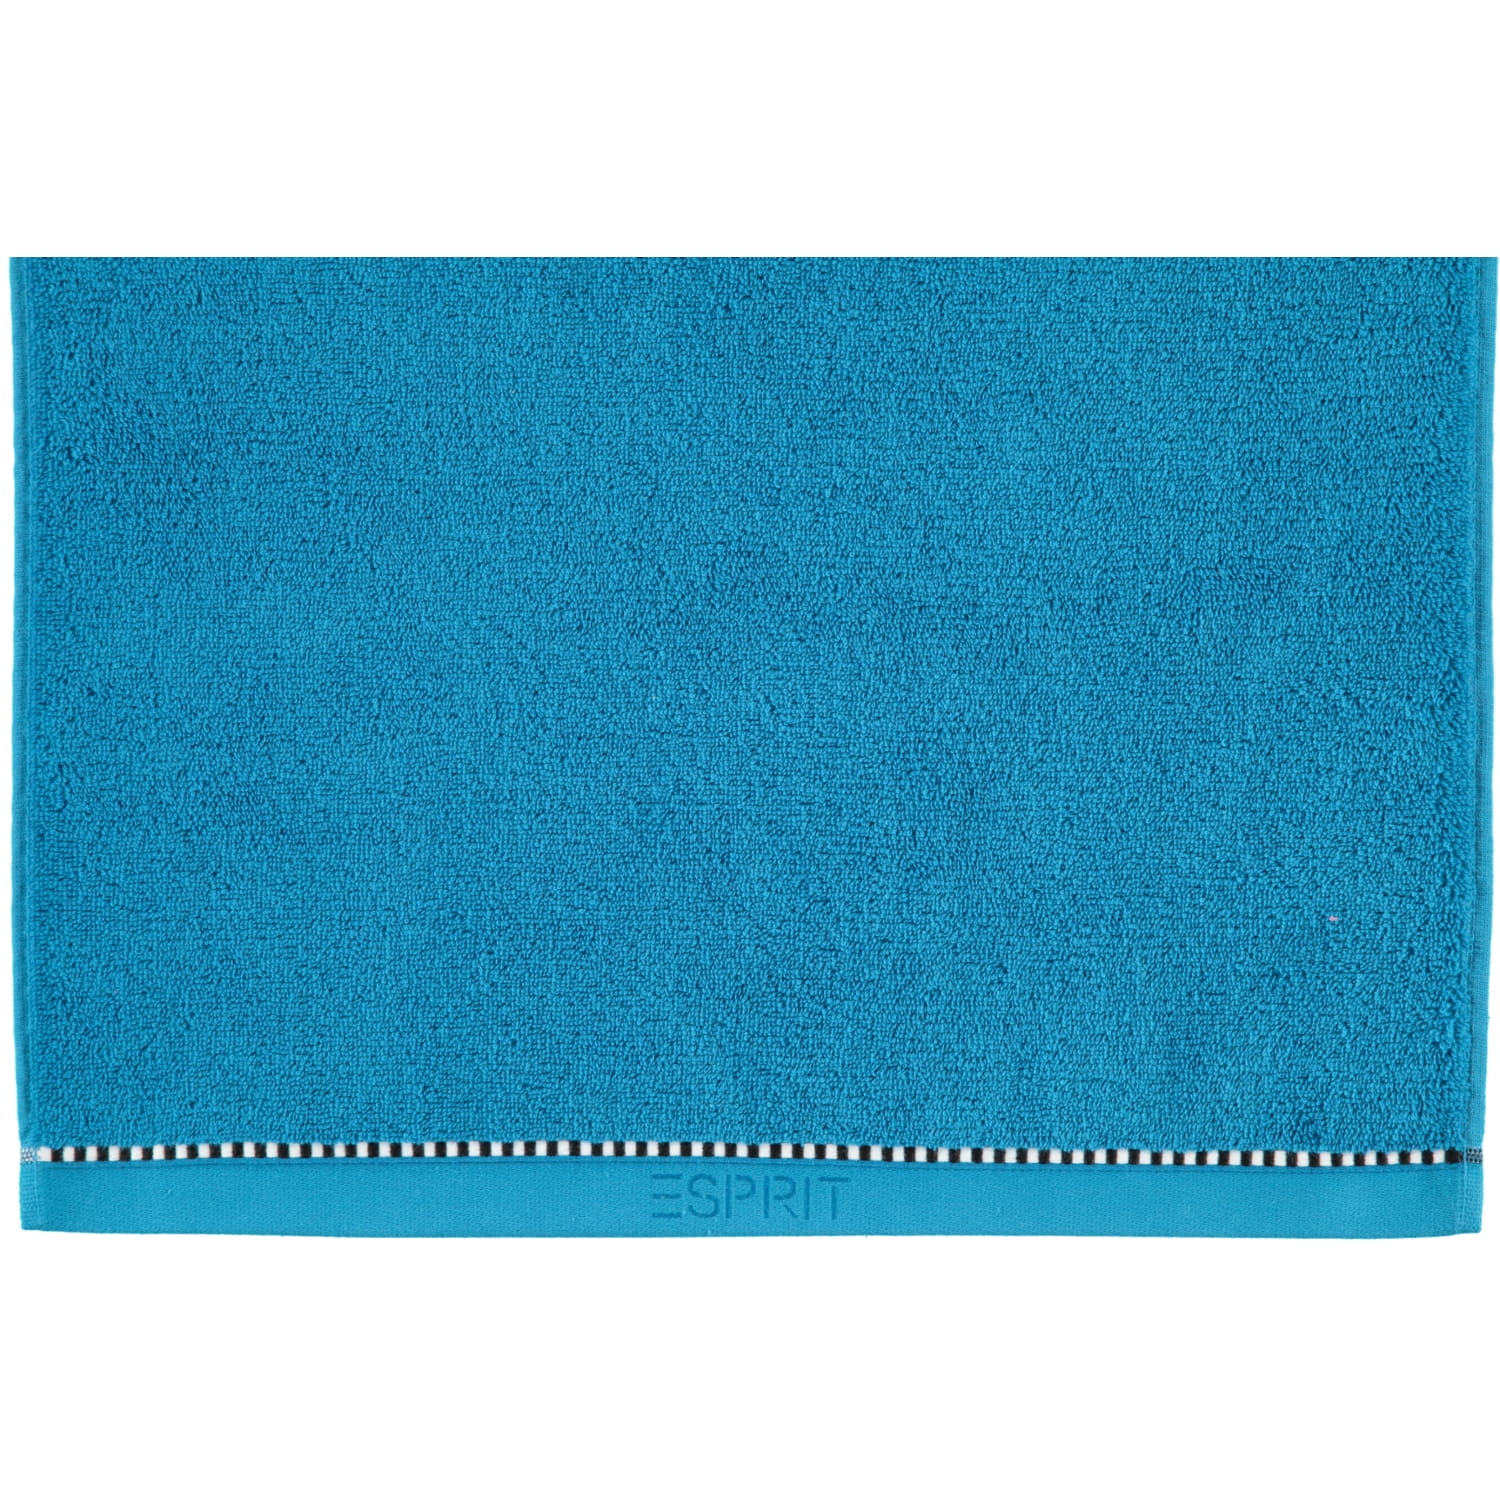 ESPRIT ESPRIT 4665 ocean Solid | | Esprit Box Marken - blue - | Farbe: Handtücher